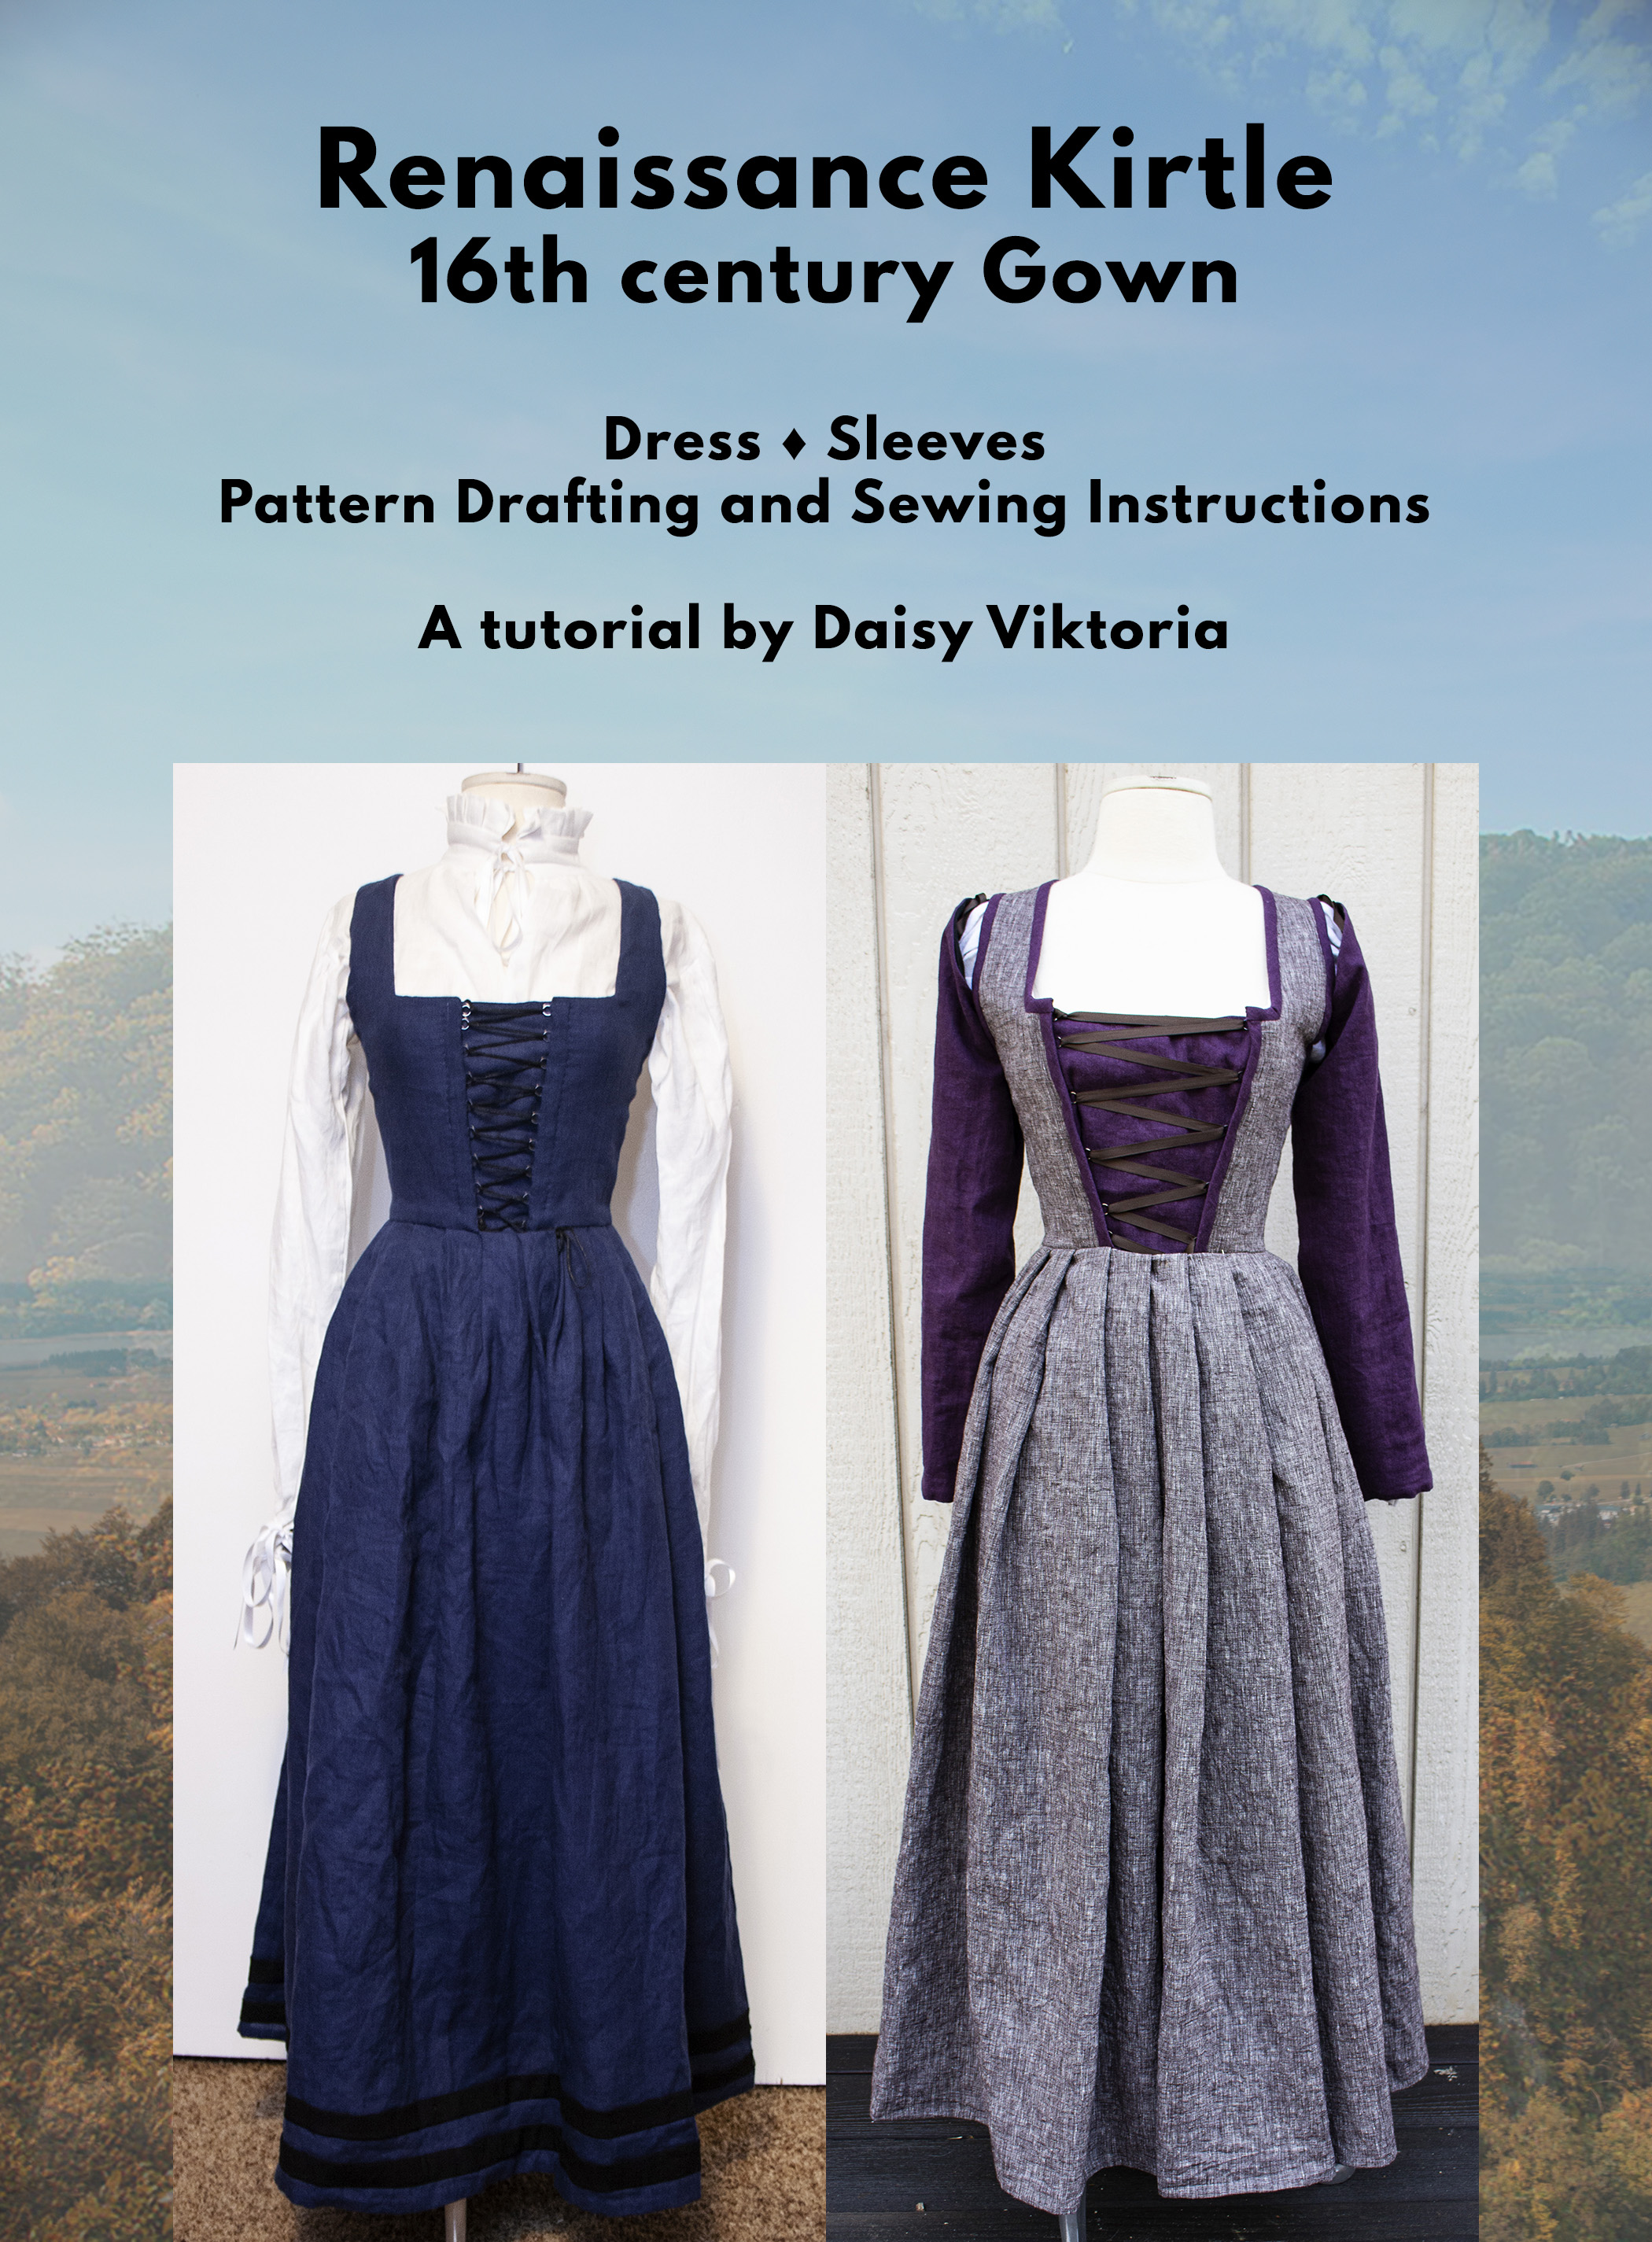 renaissance-dress-kirtle-gown-16th-century-sca-faire-garb-pdf-tutorial-pattern-drafting